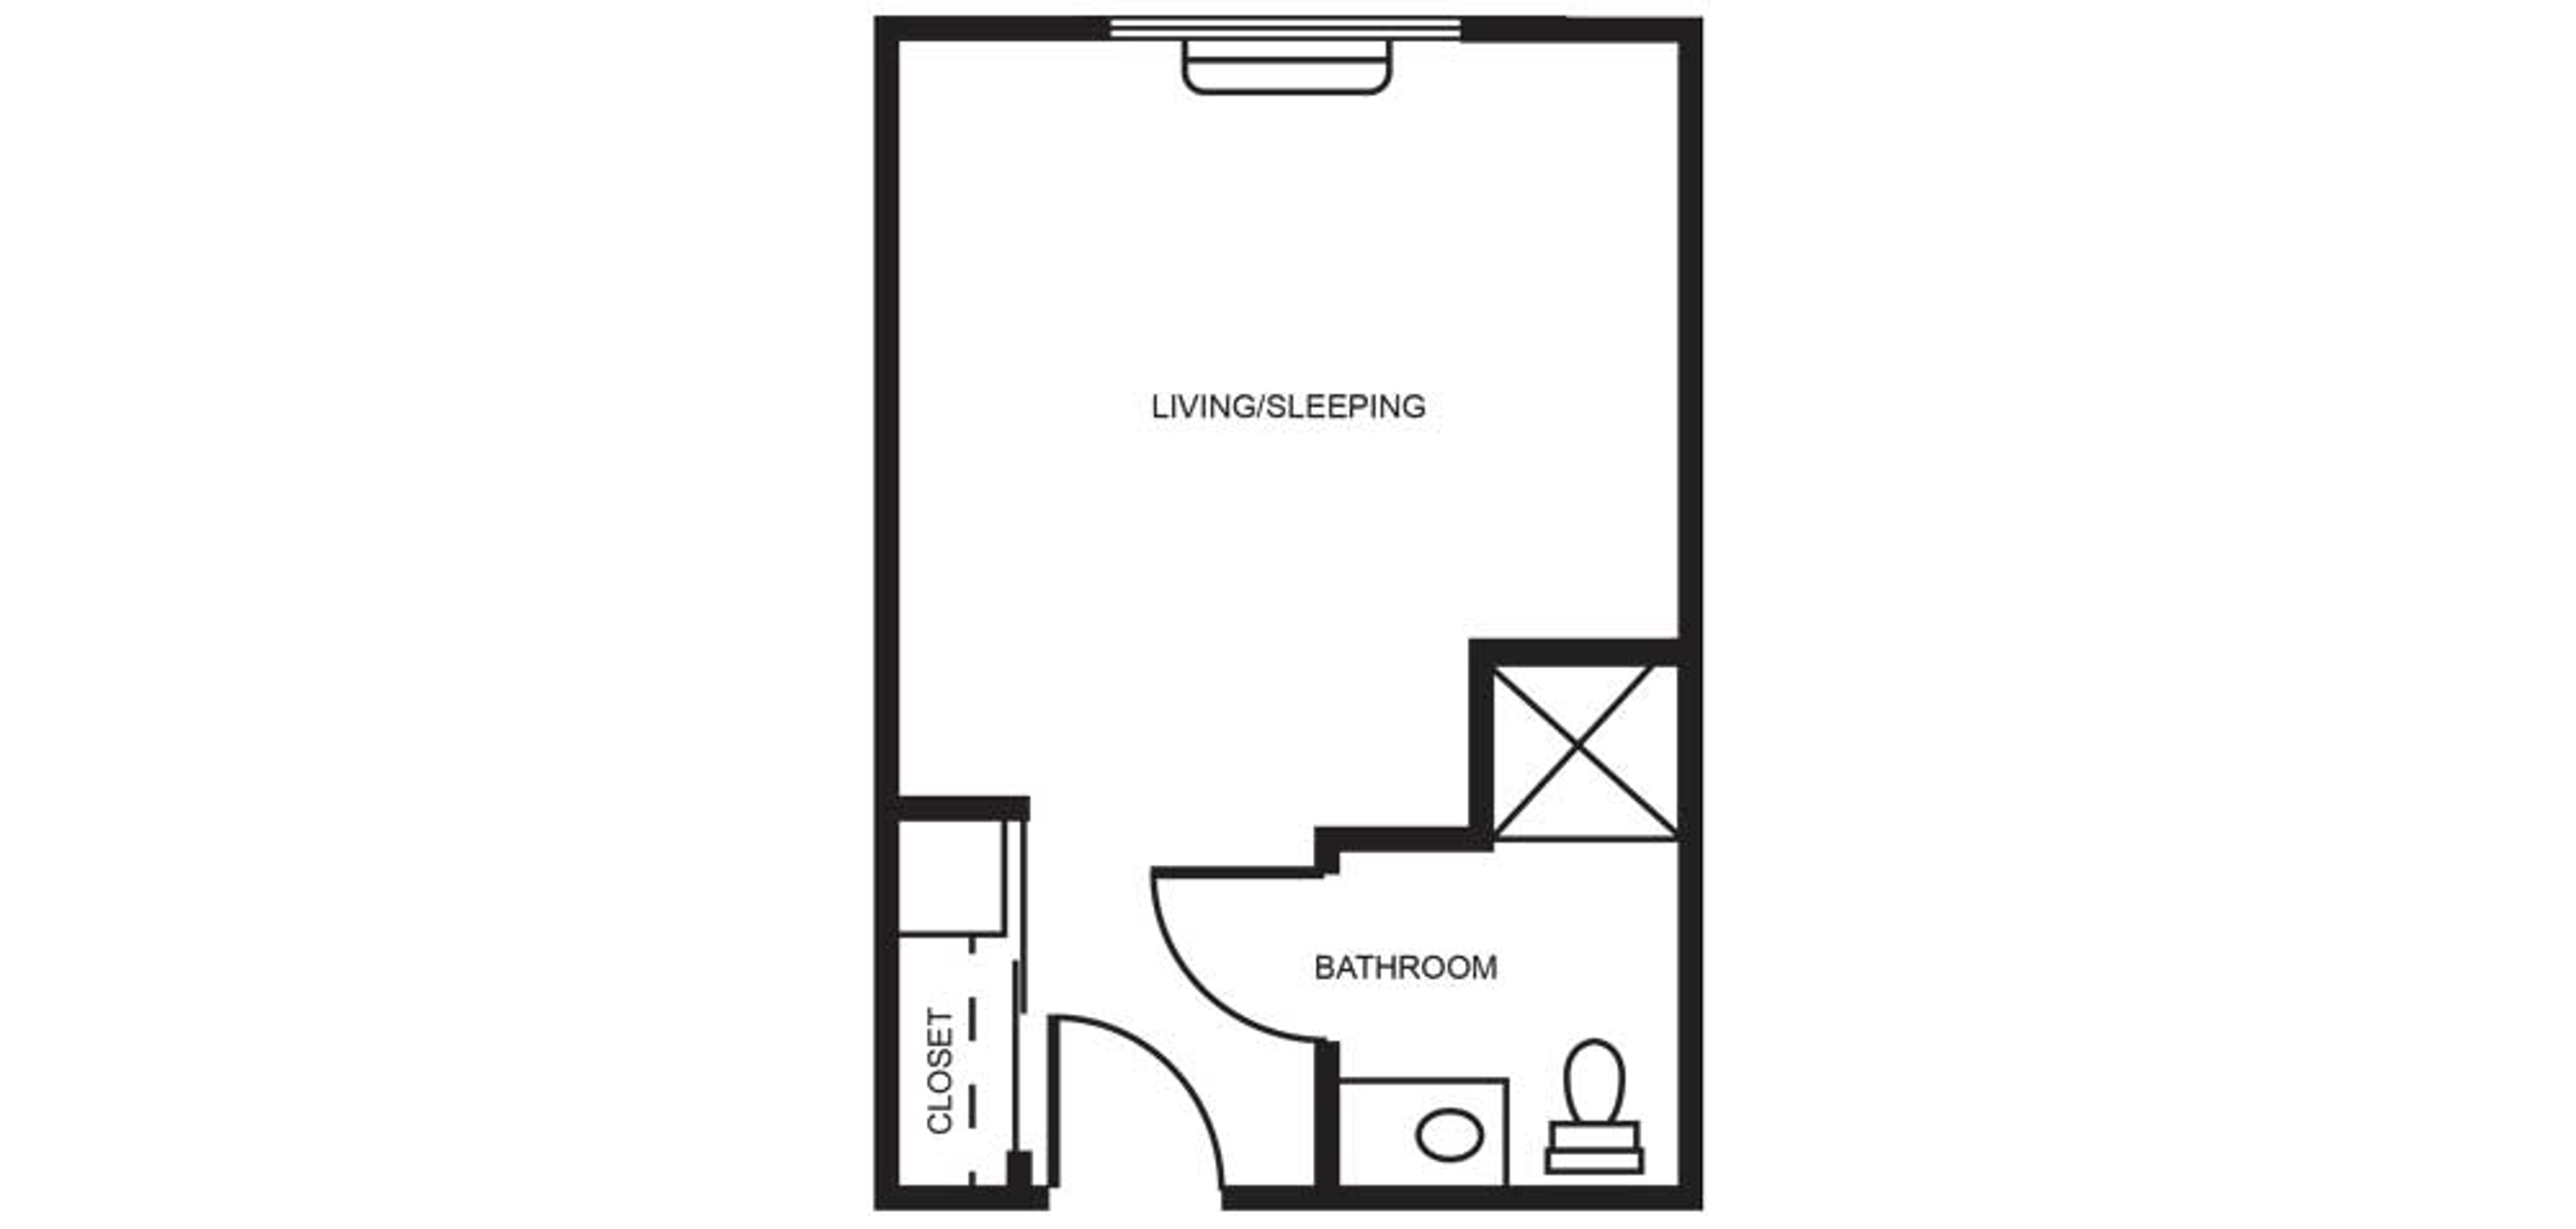 Floorplan - Barathaven - Private suite